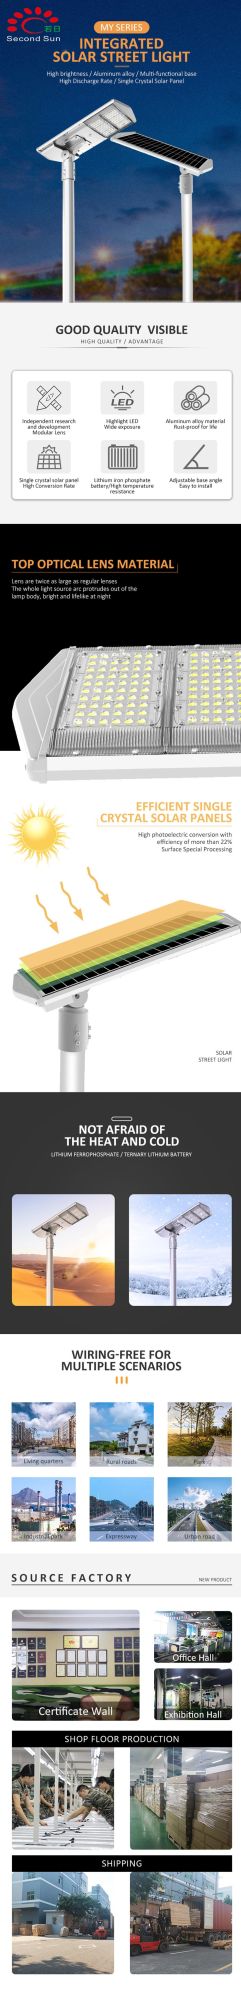 Second Sun Hot Sale All in One Outdoor 80W 100W 120W LED Solar Street Light Motion Sensor Home Light